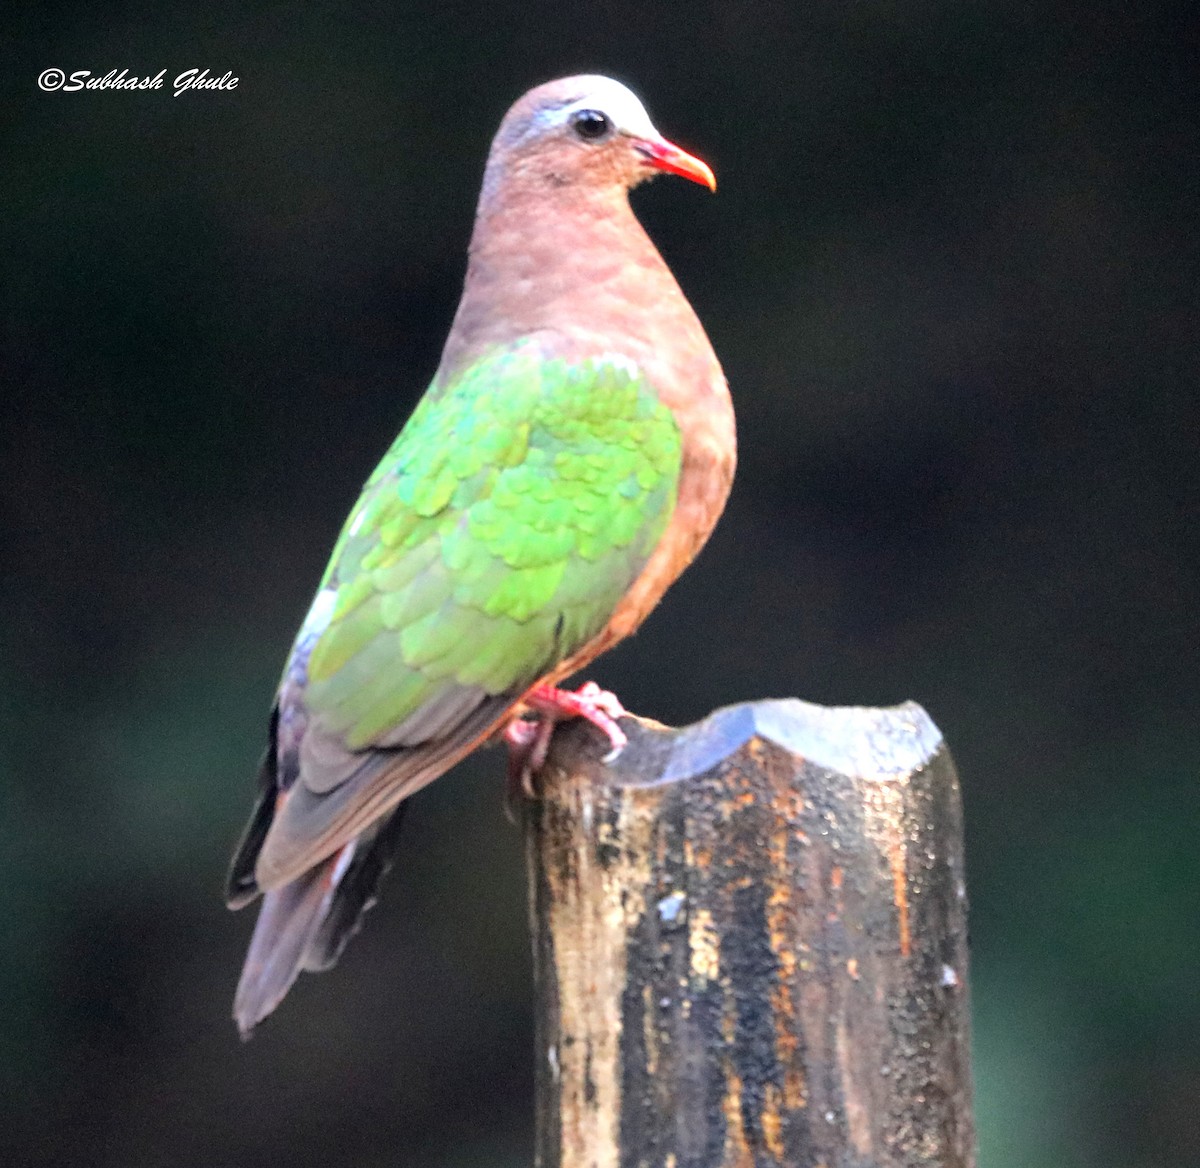 Asian Emerald Dove - SUBHASH GHULE